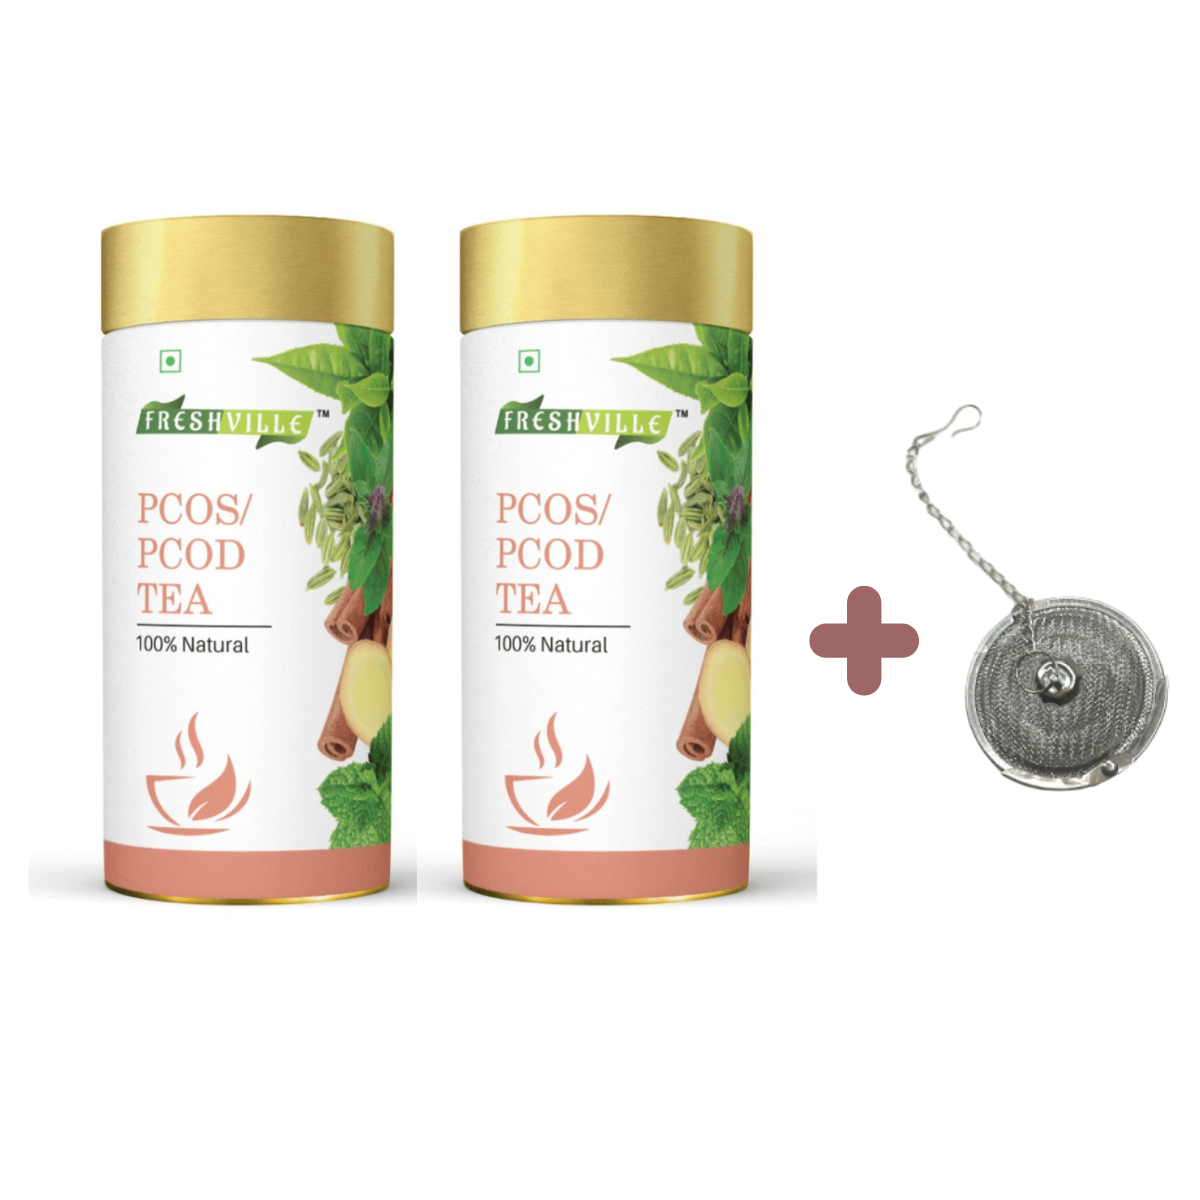 Freshville PCOS PCOD Tea | Regularizes period cycle with herbs Ginger, Fenugreek, Spearmint, Cinnamon, Fennel, Tulsi, Lodhra, Ashoka